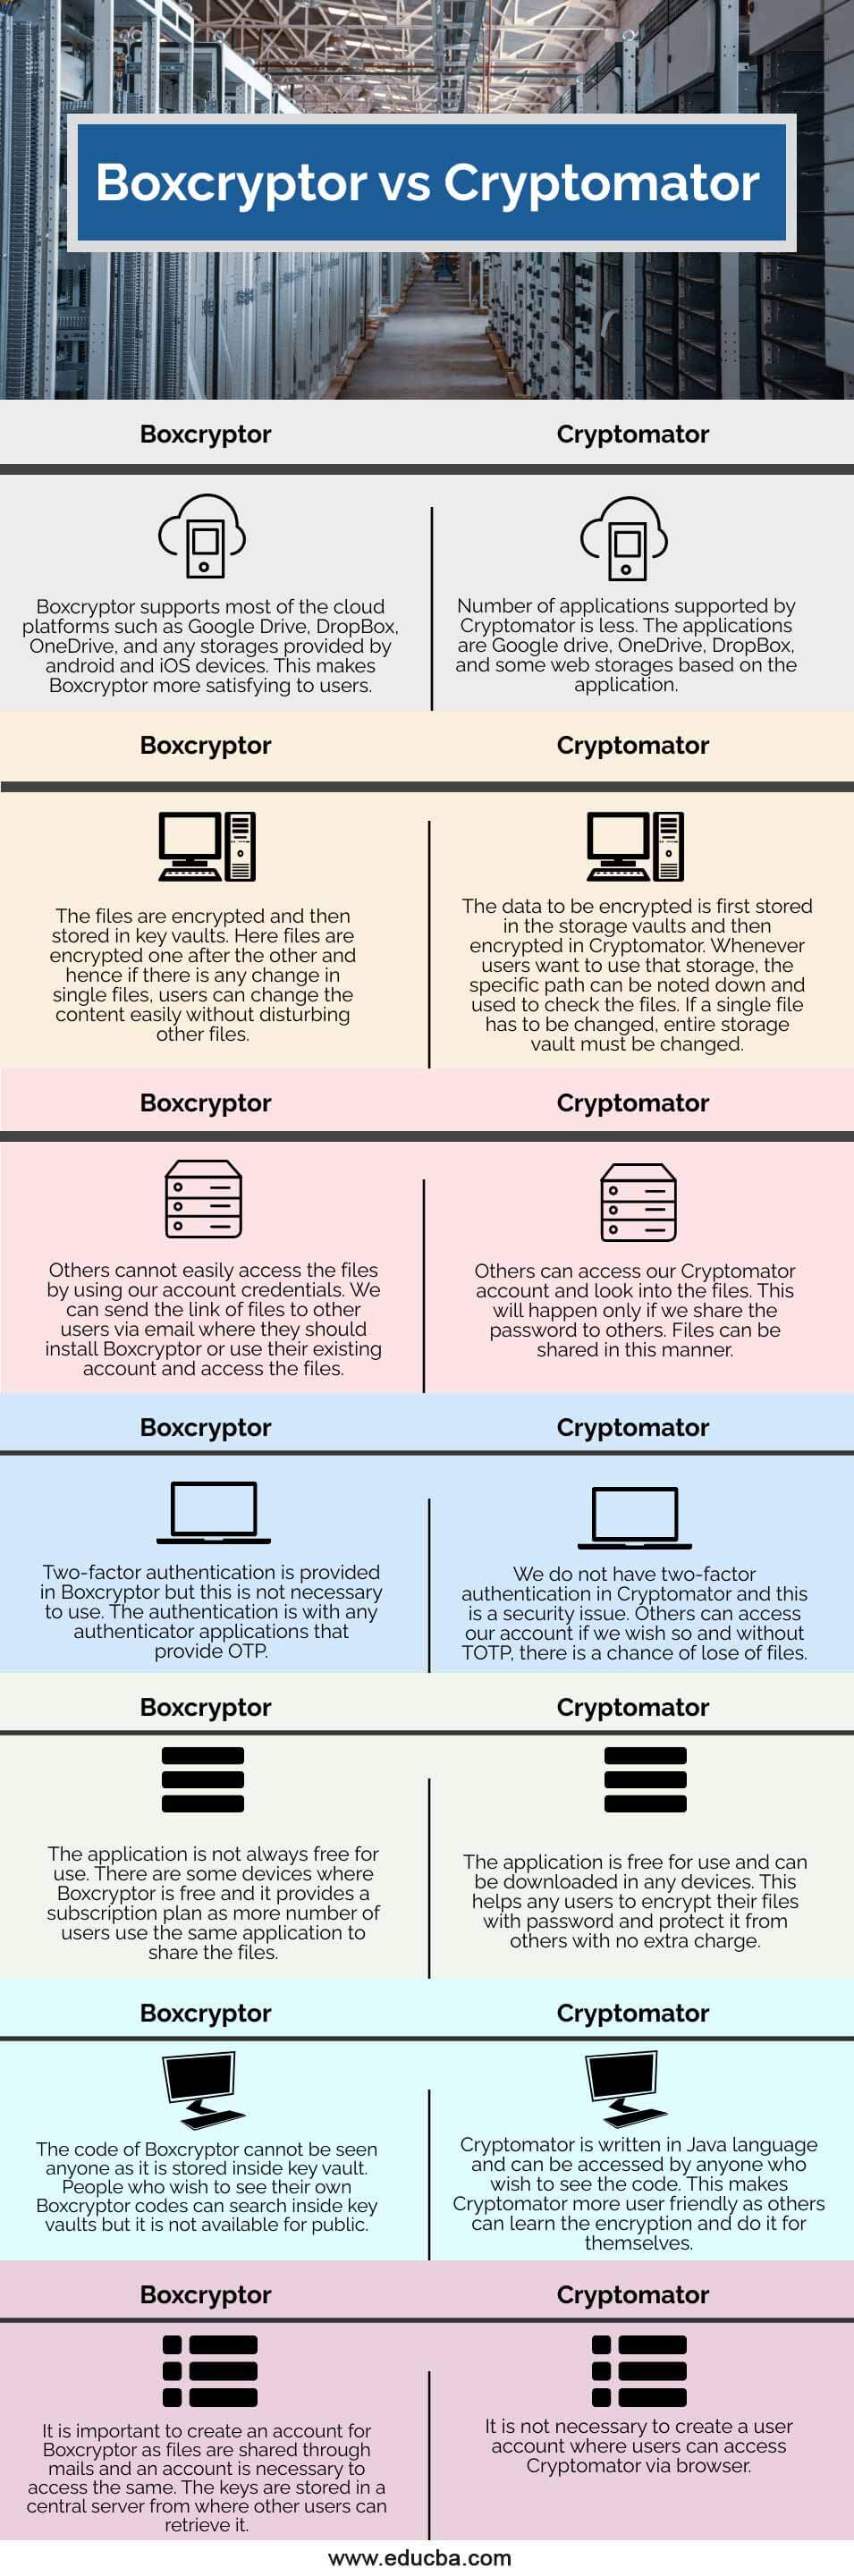 Boxcryptor-vs-Cryptomator-info